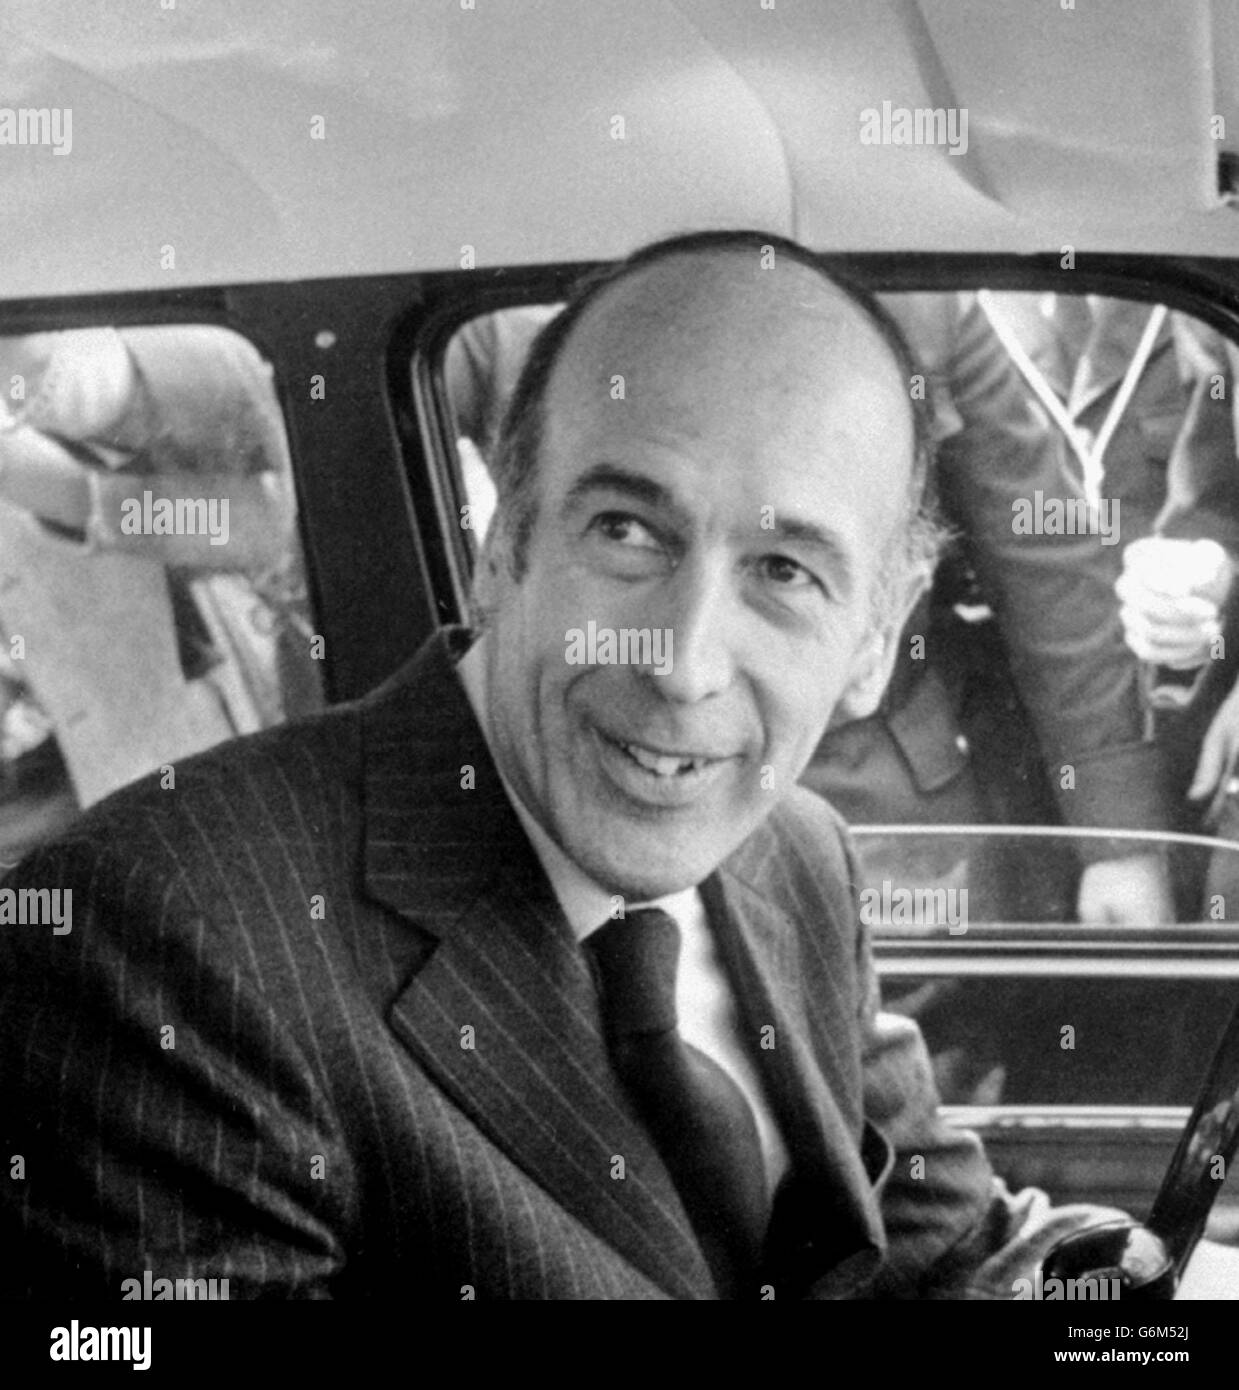 Valery Giscard d'Estaing. Stock Photo